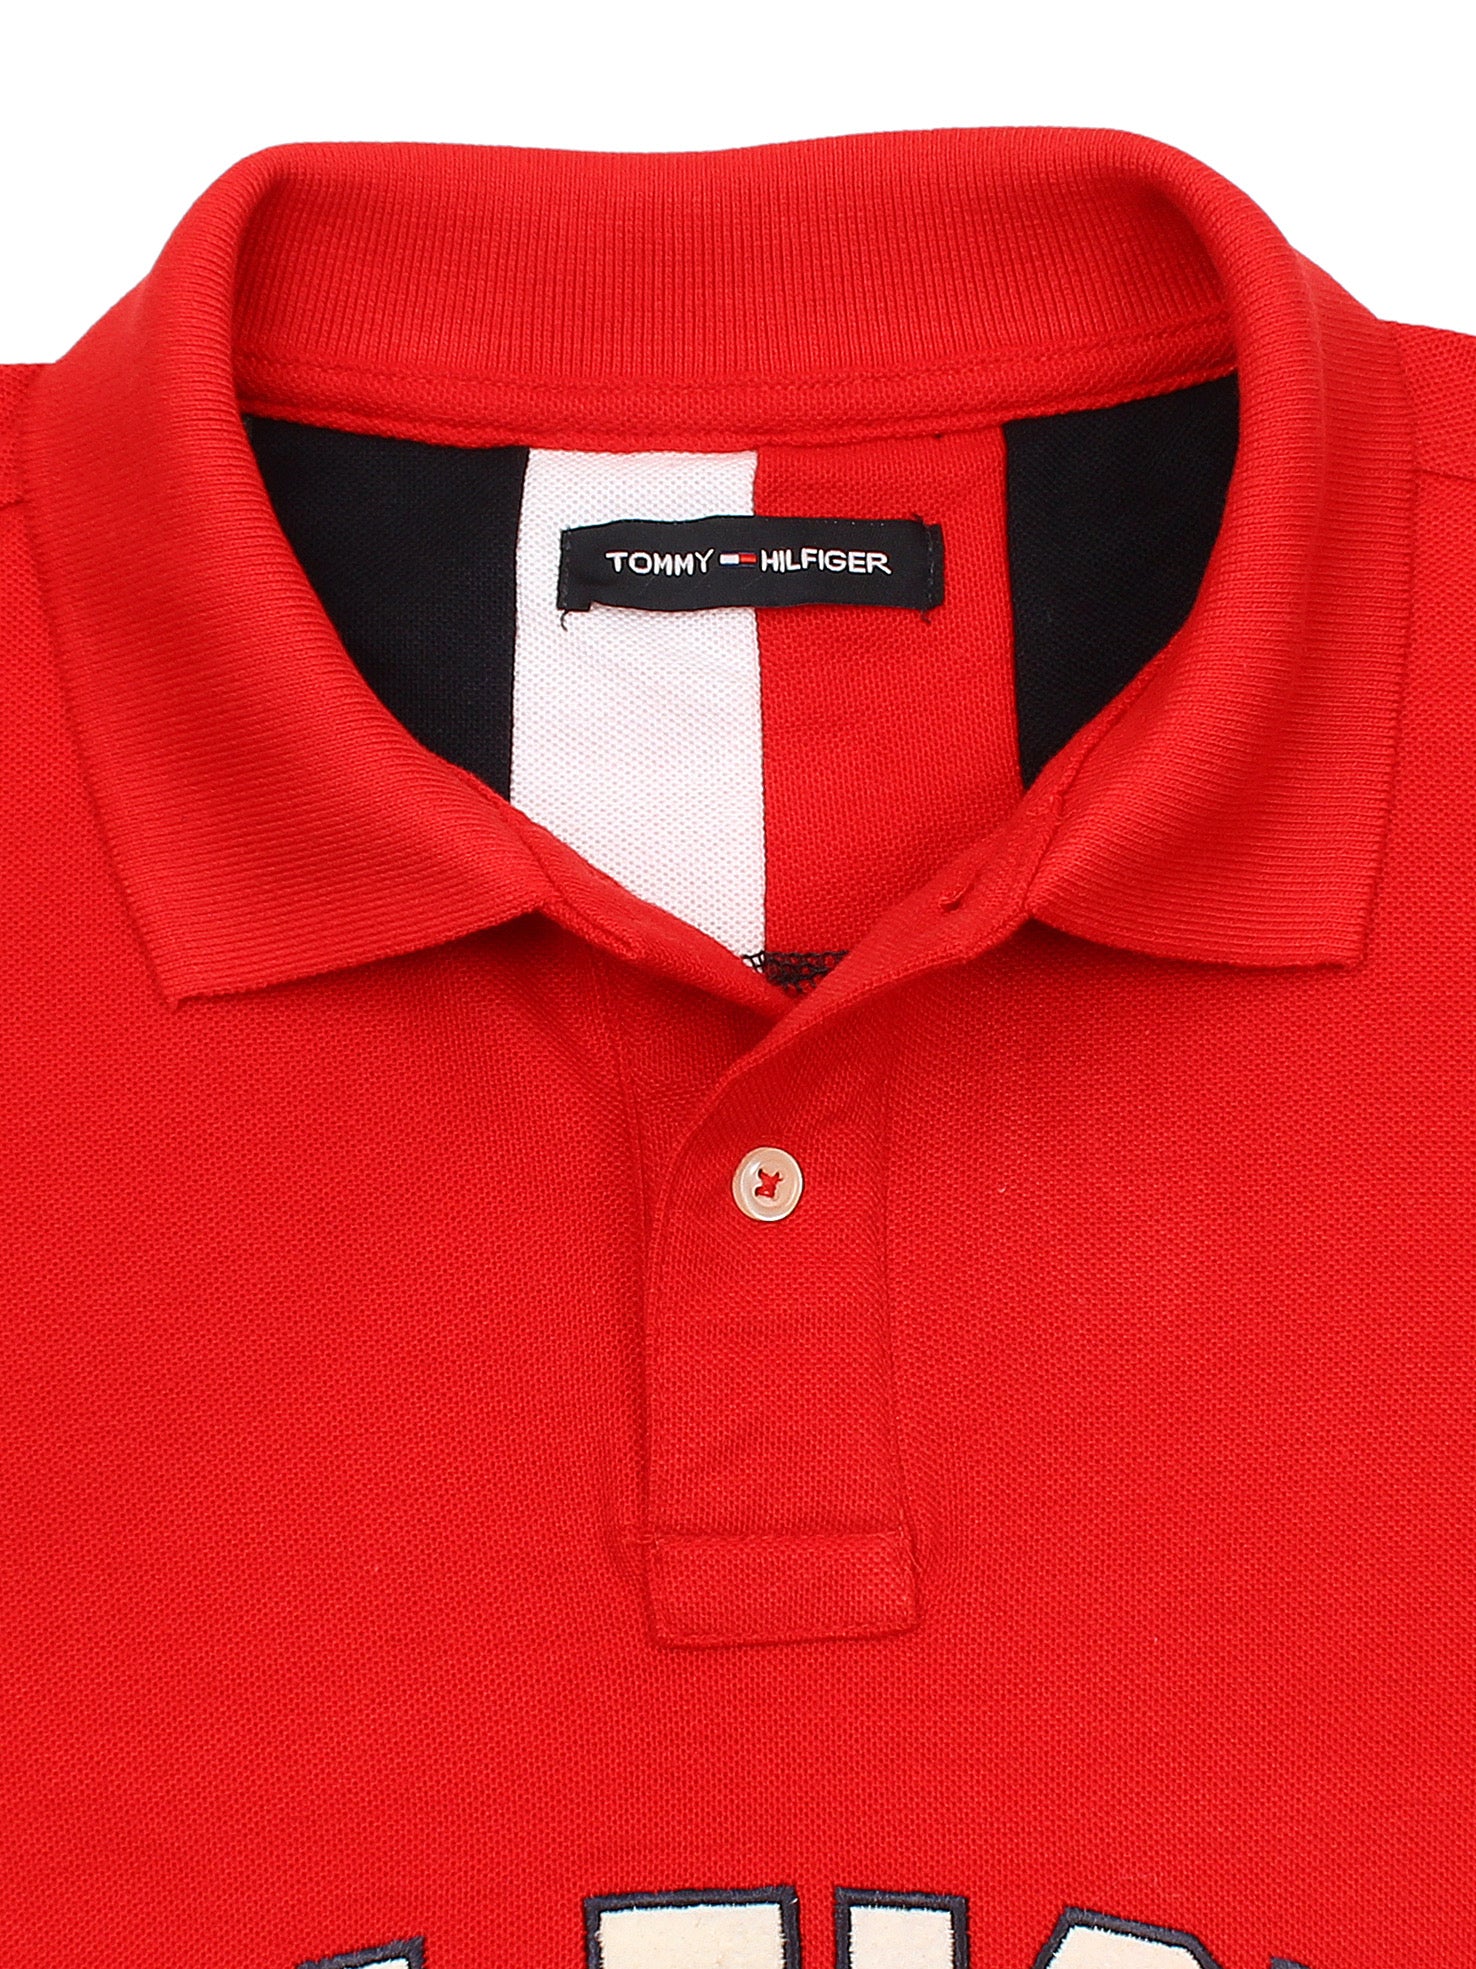 HLFGR soft cotton red polo shirt(00335)